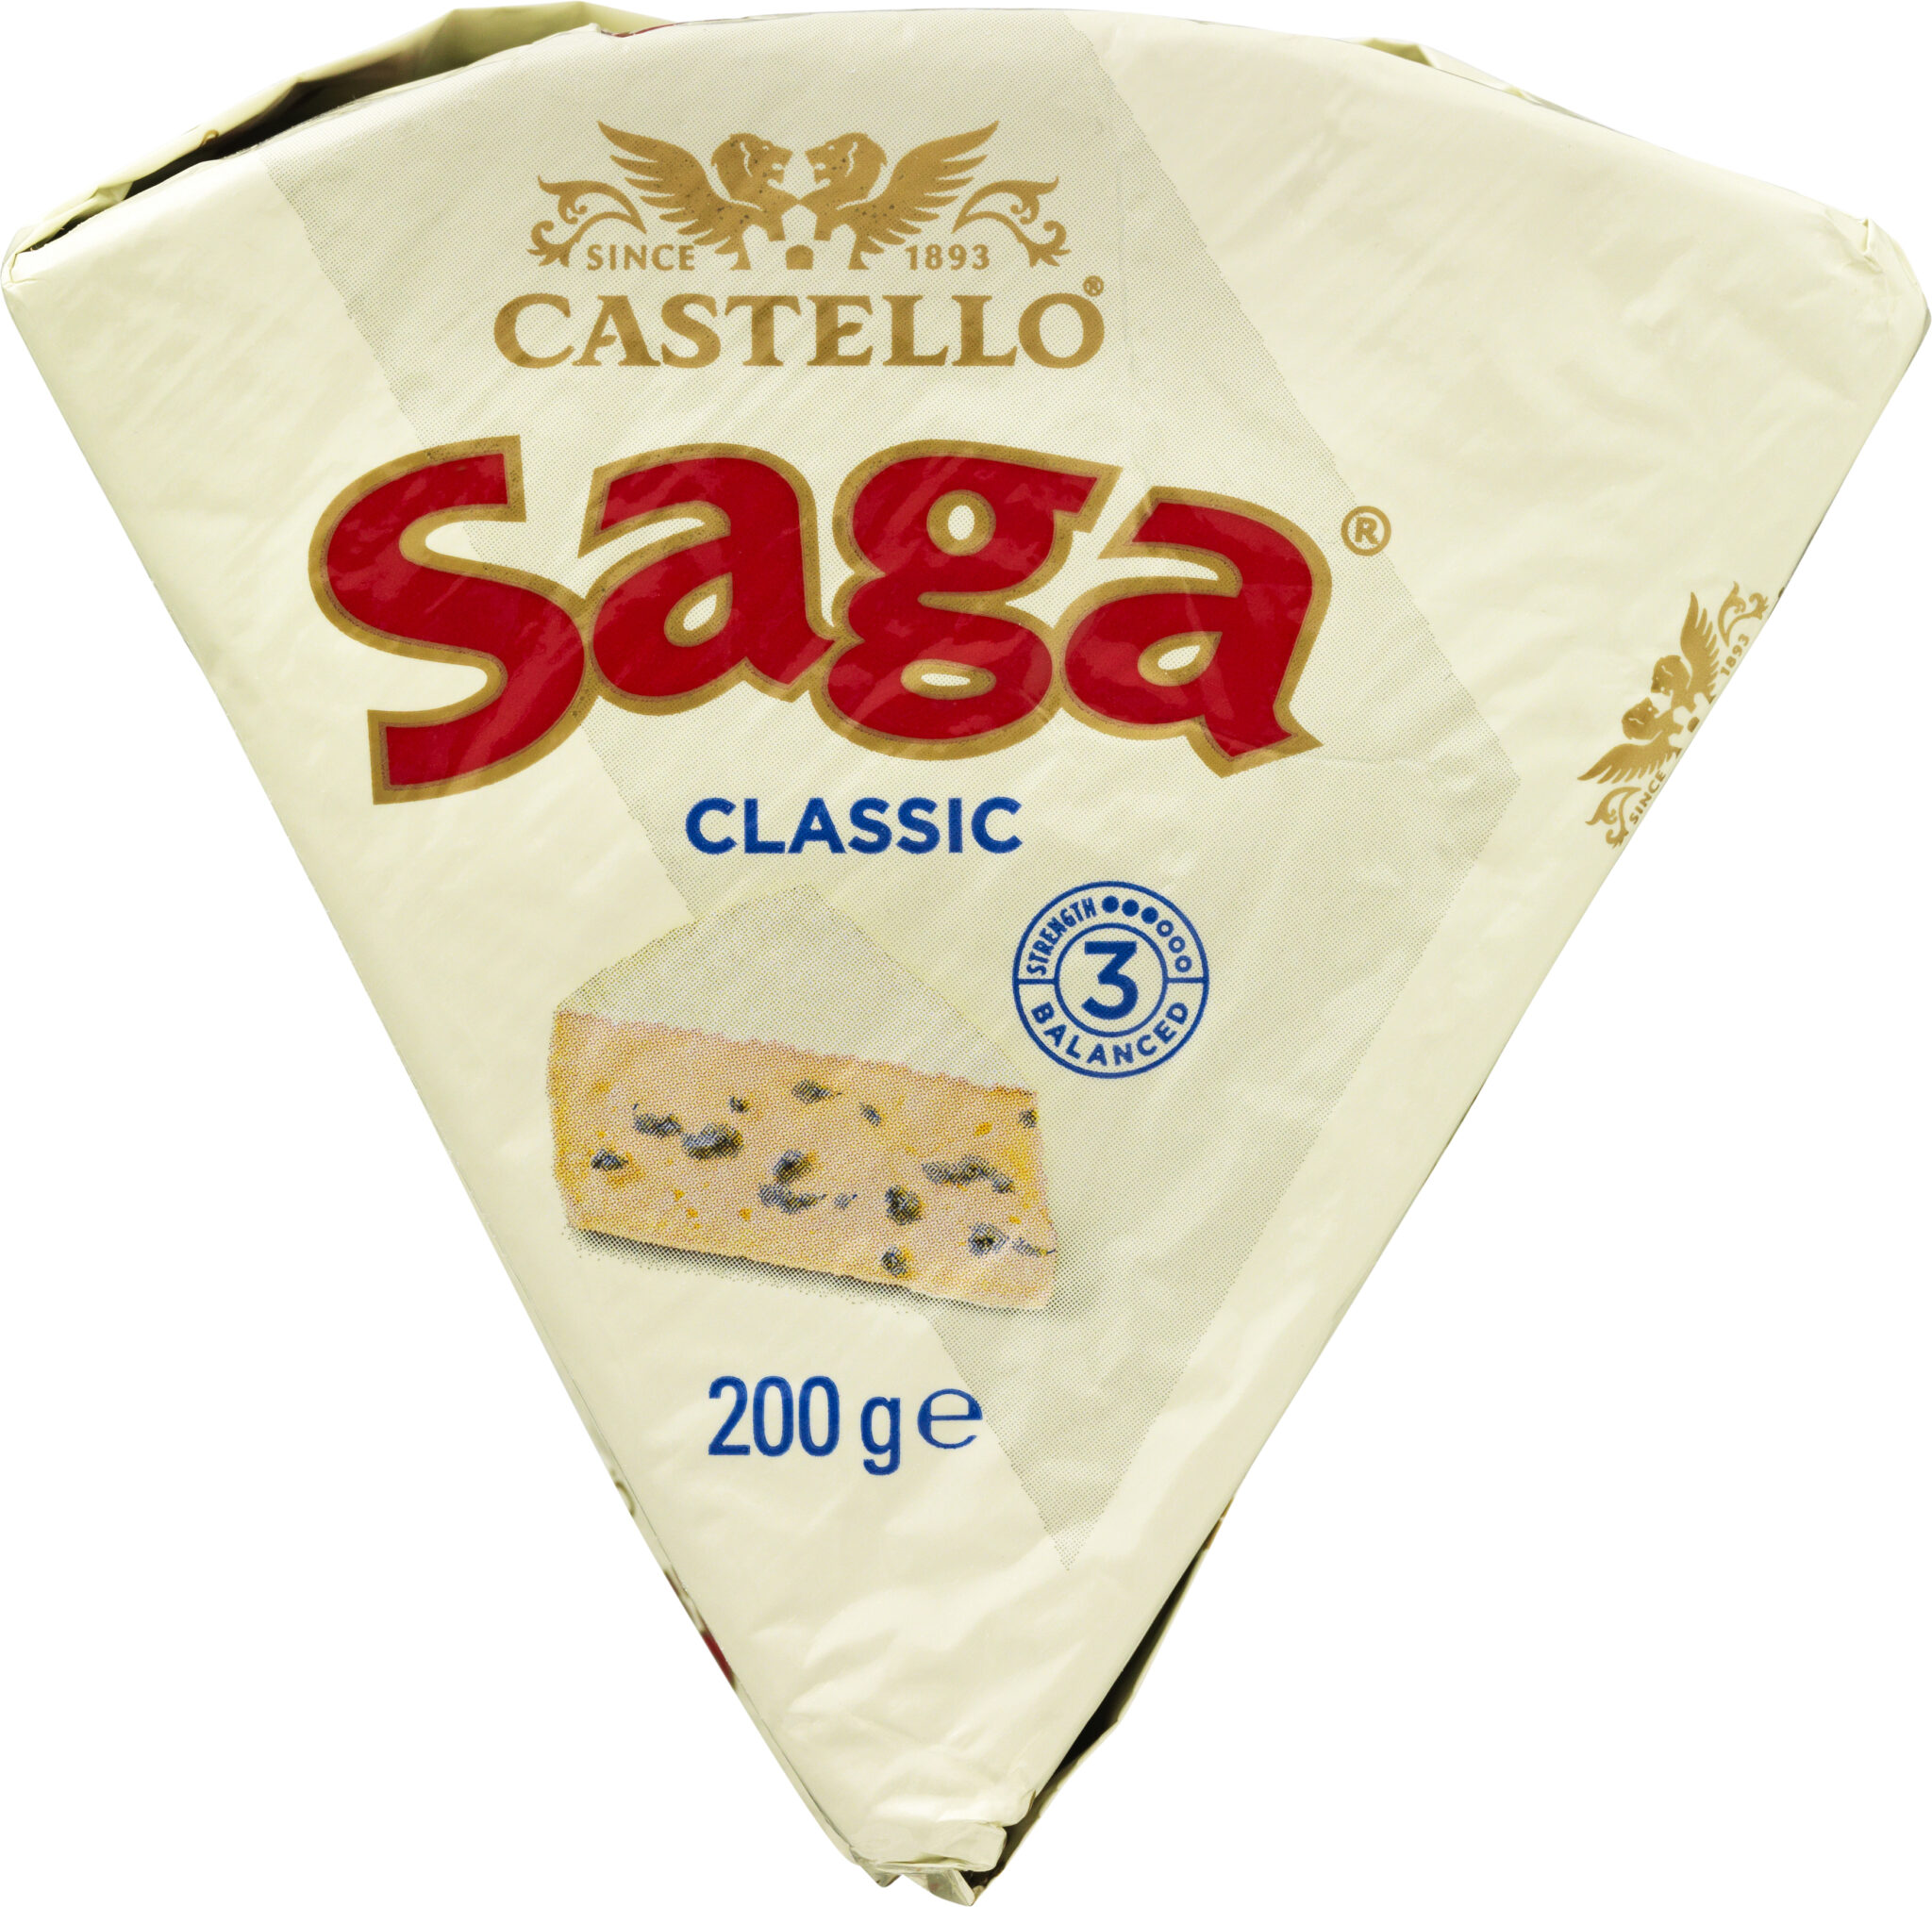 Castello Saga Classic 6x200g